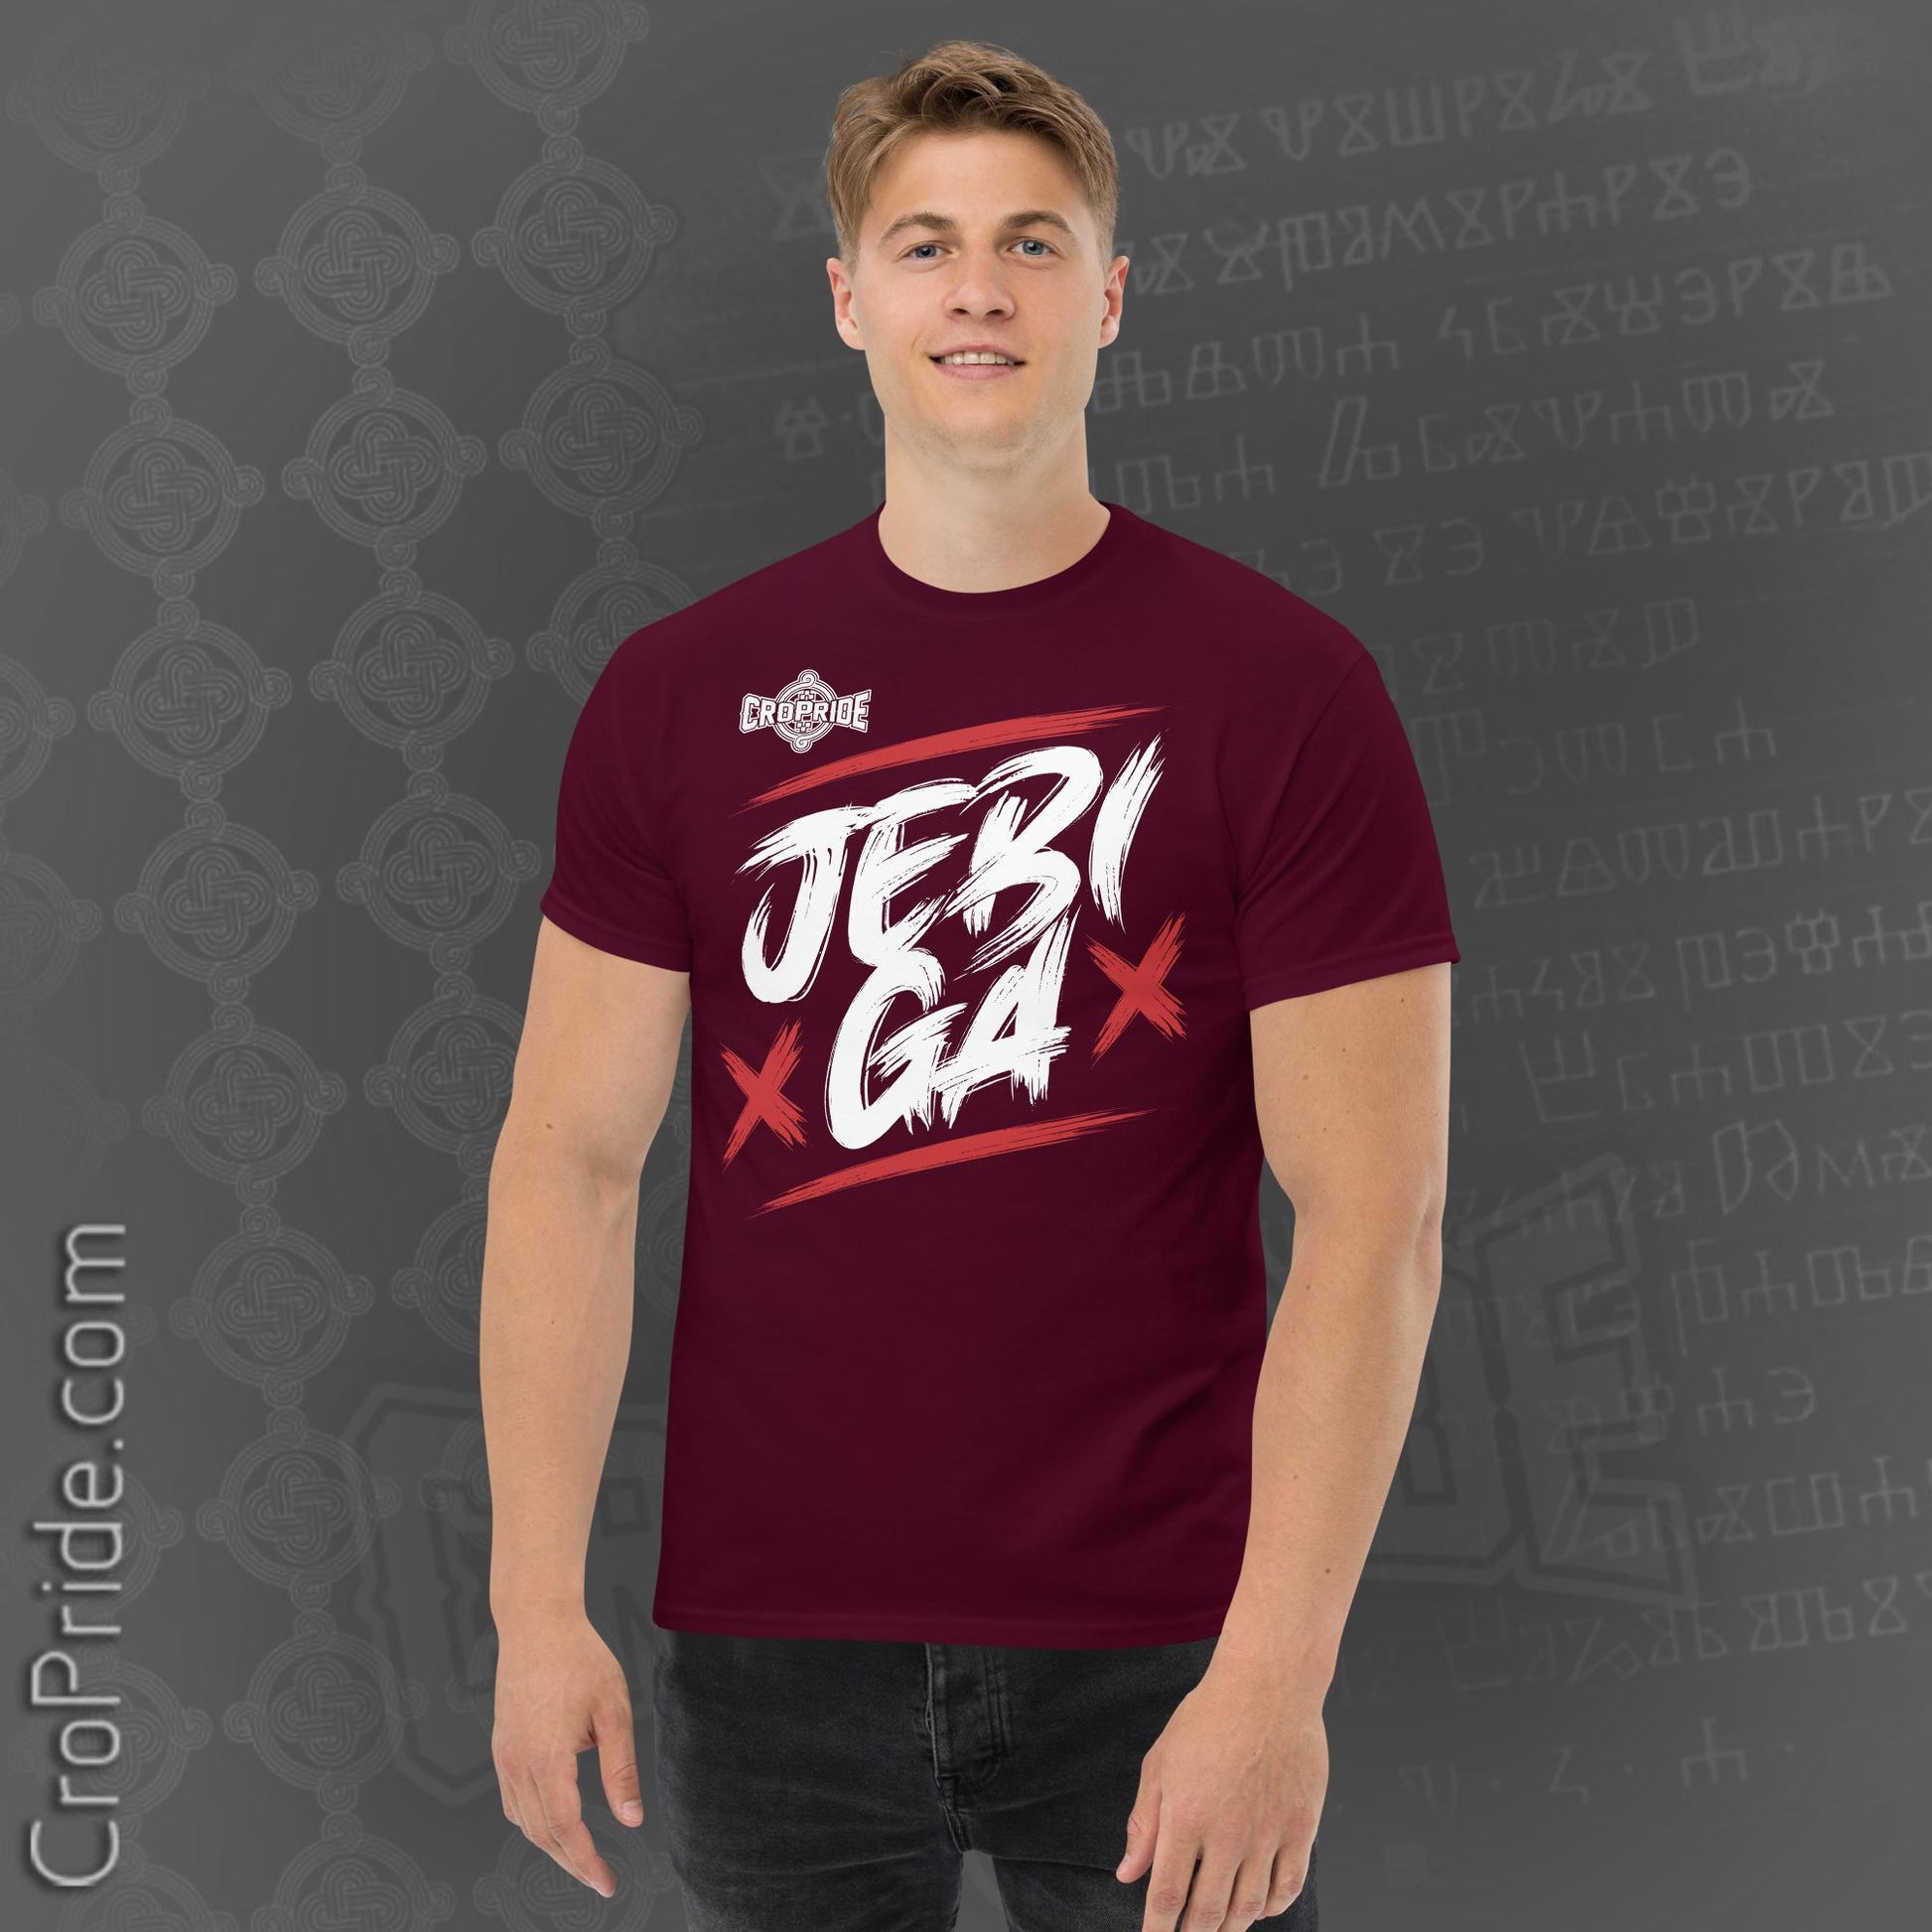 "Jebi Ga' CroPride Gear Designed T-Shirt